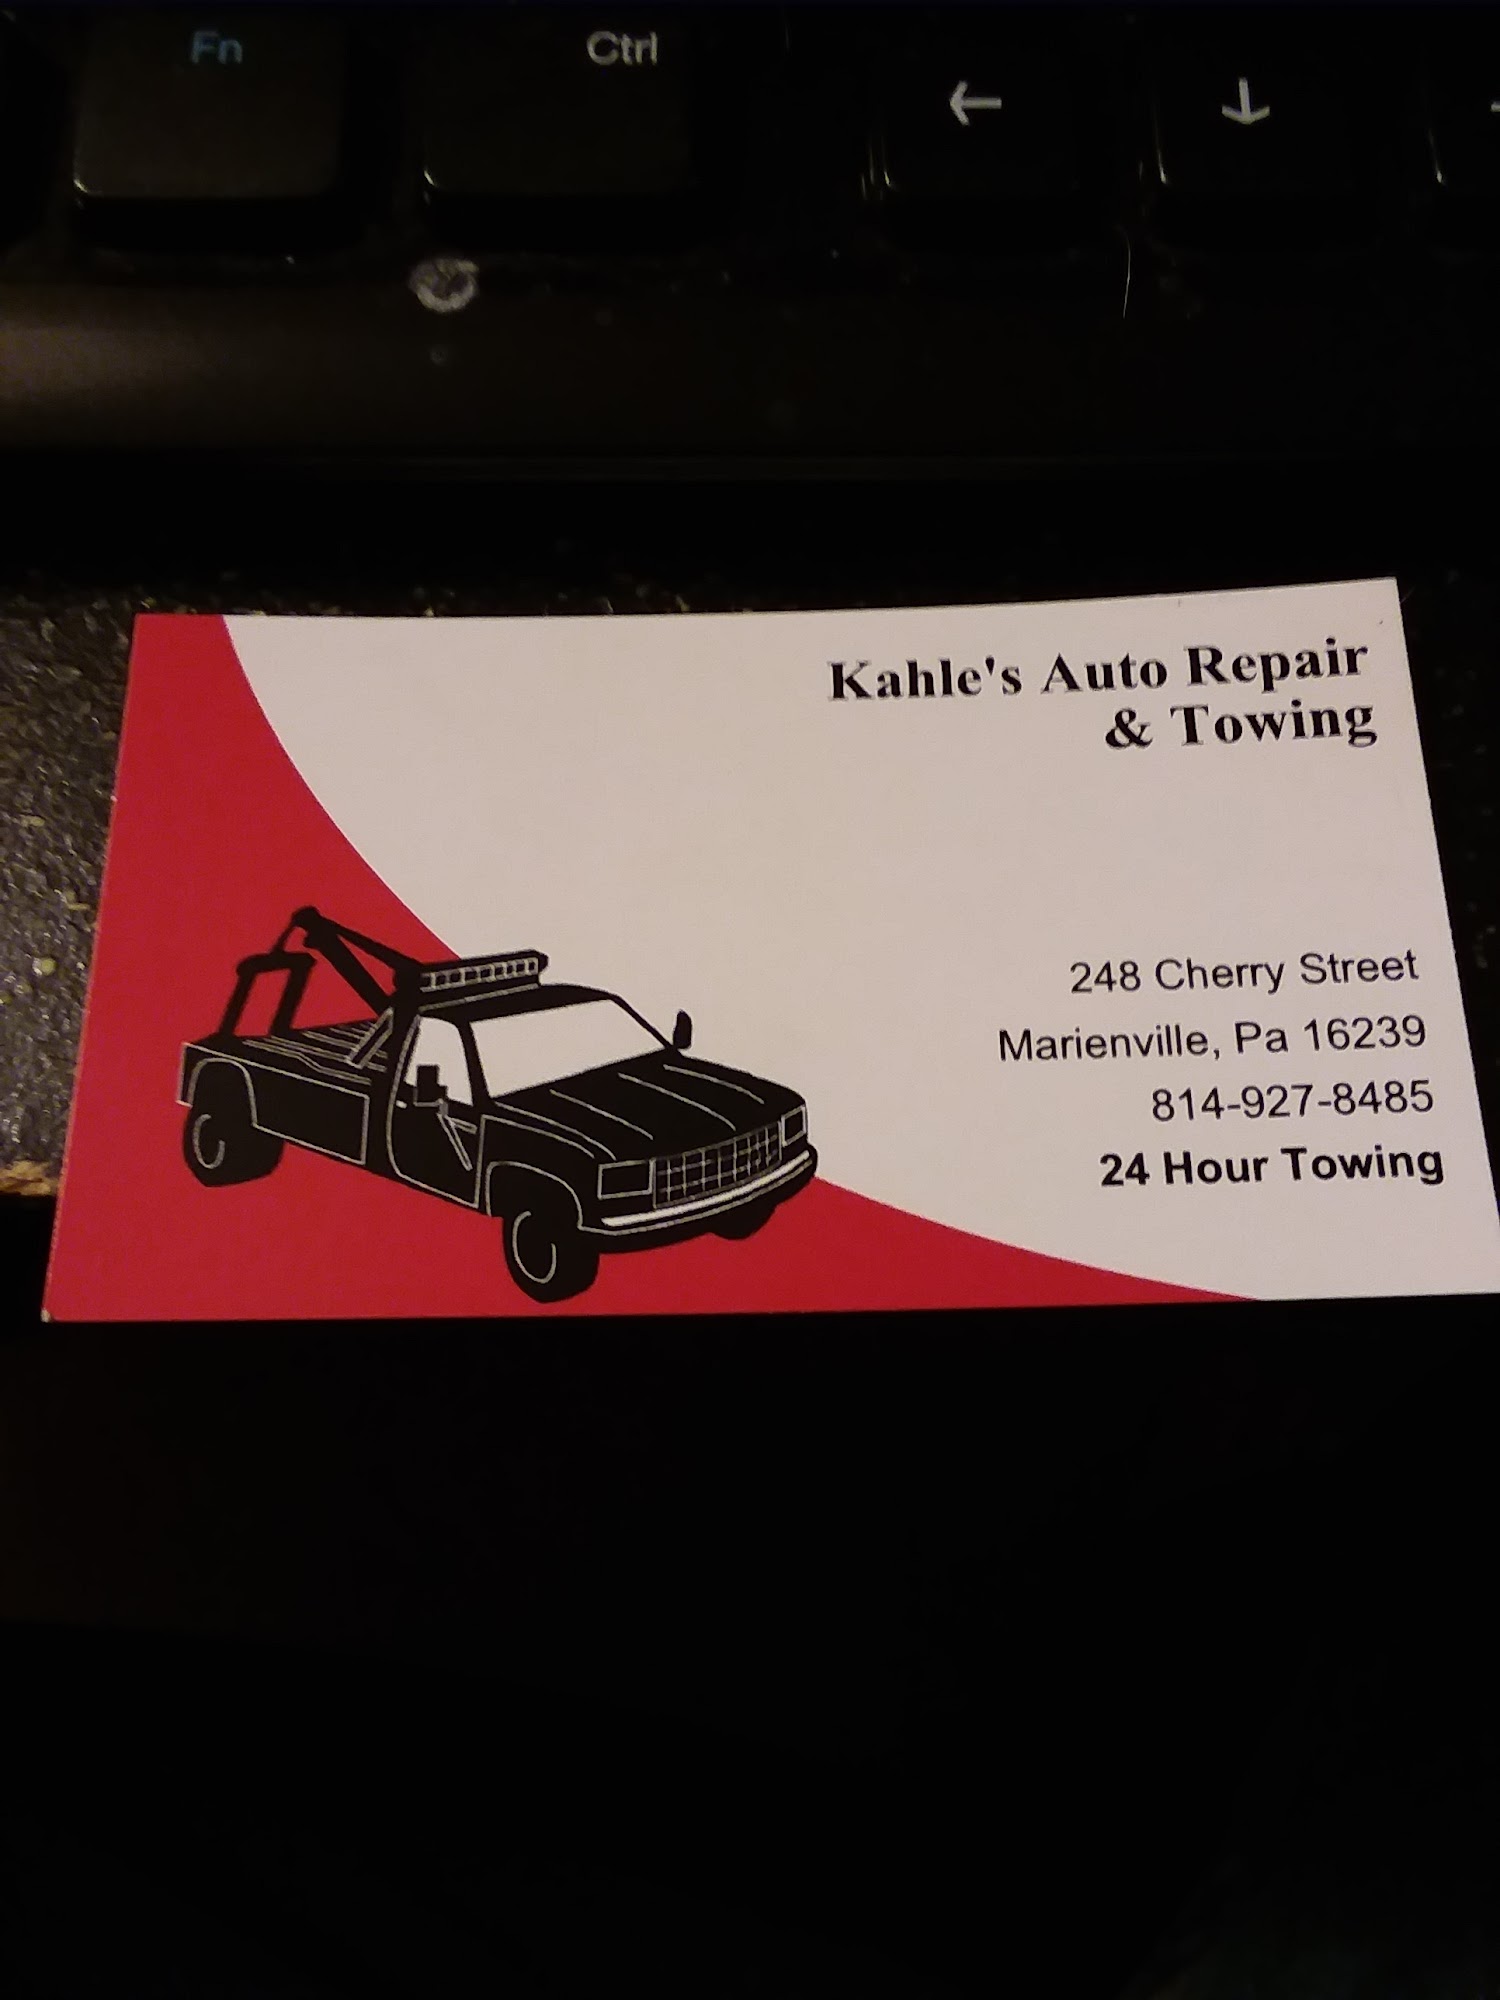 Kahles Auto Repair & Towing